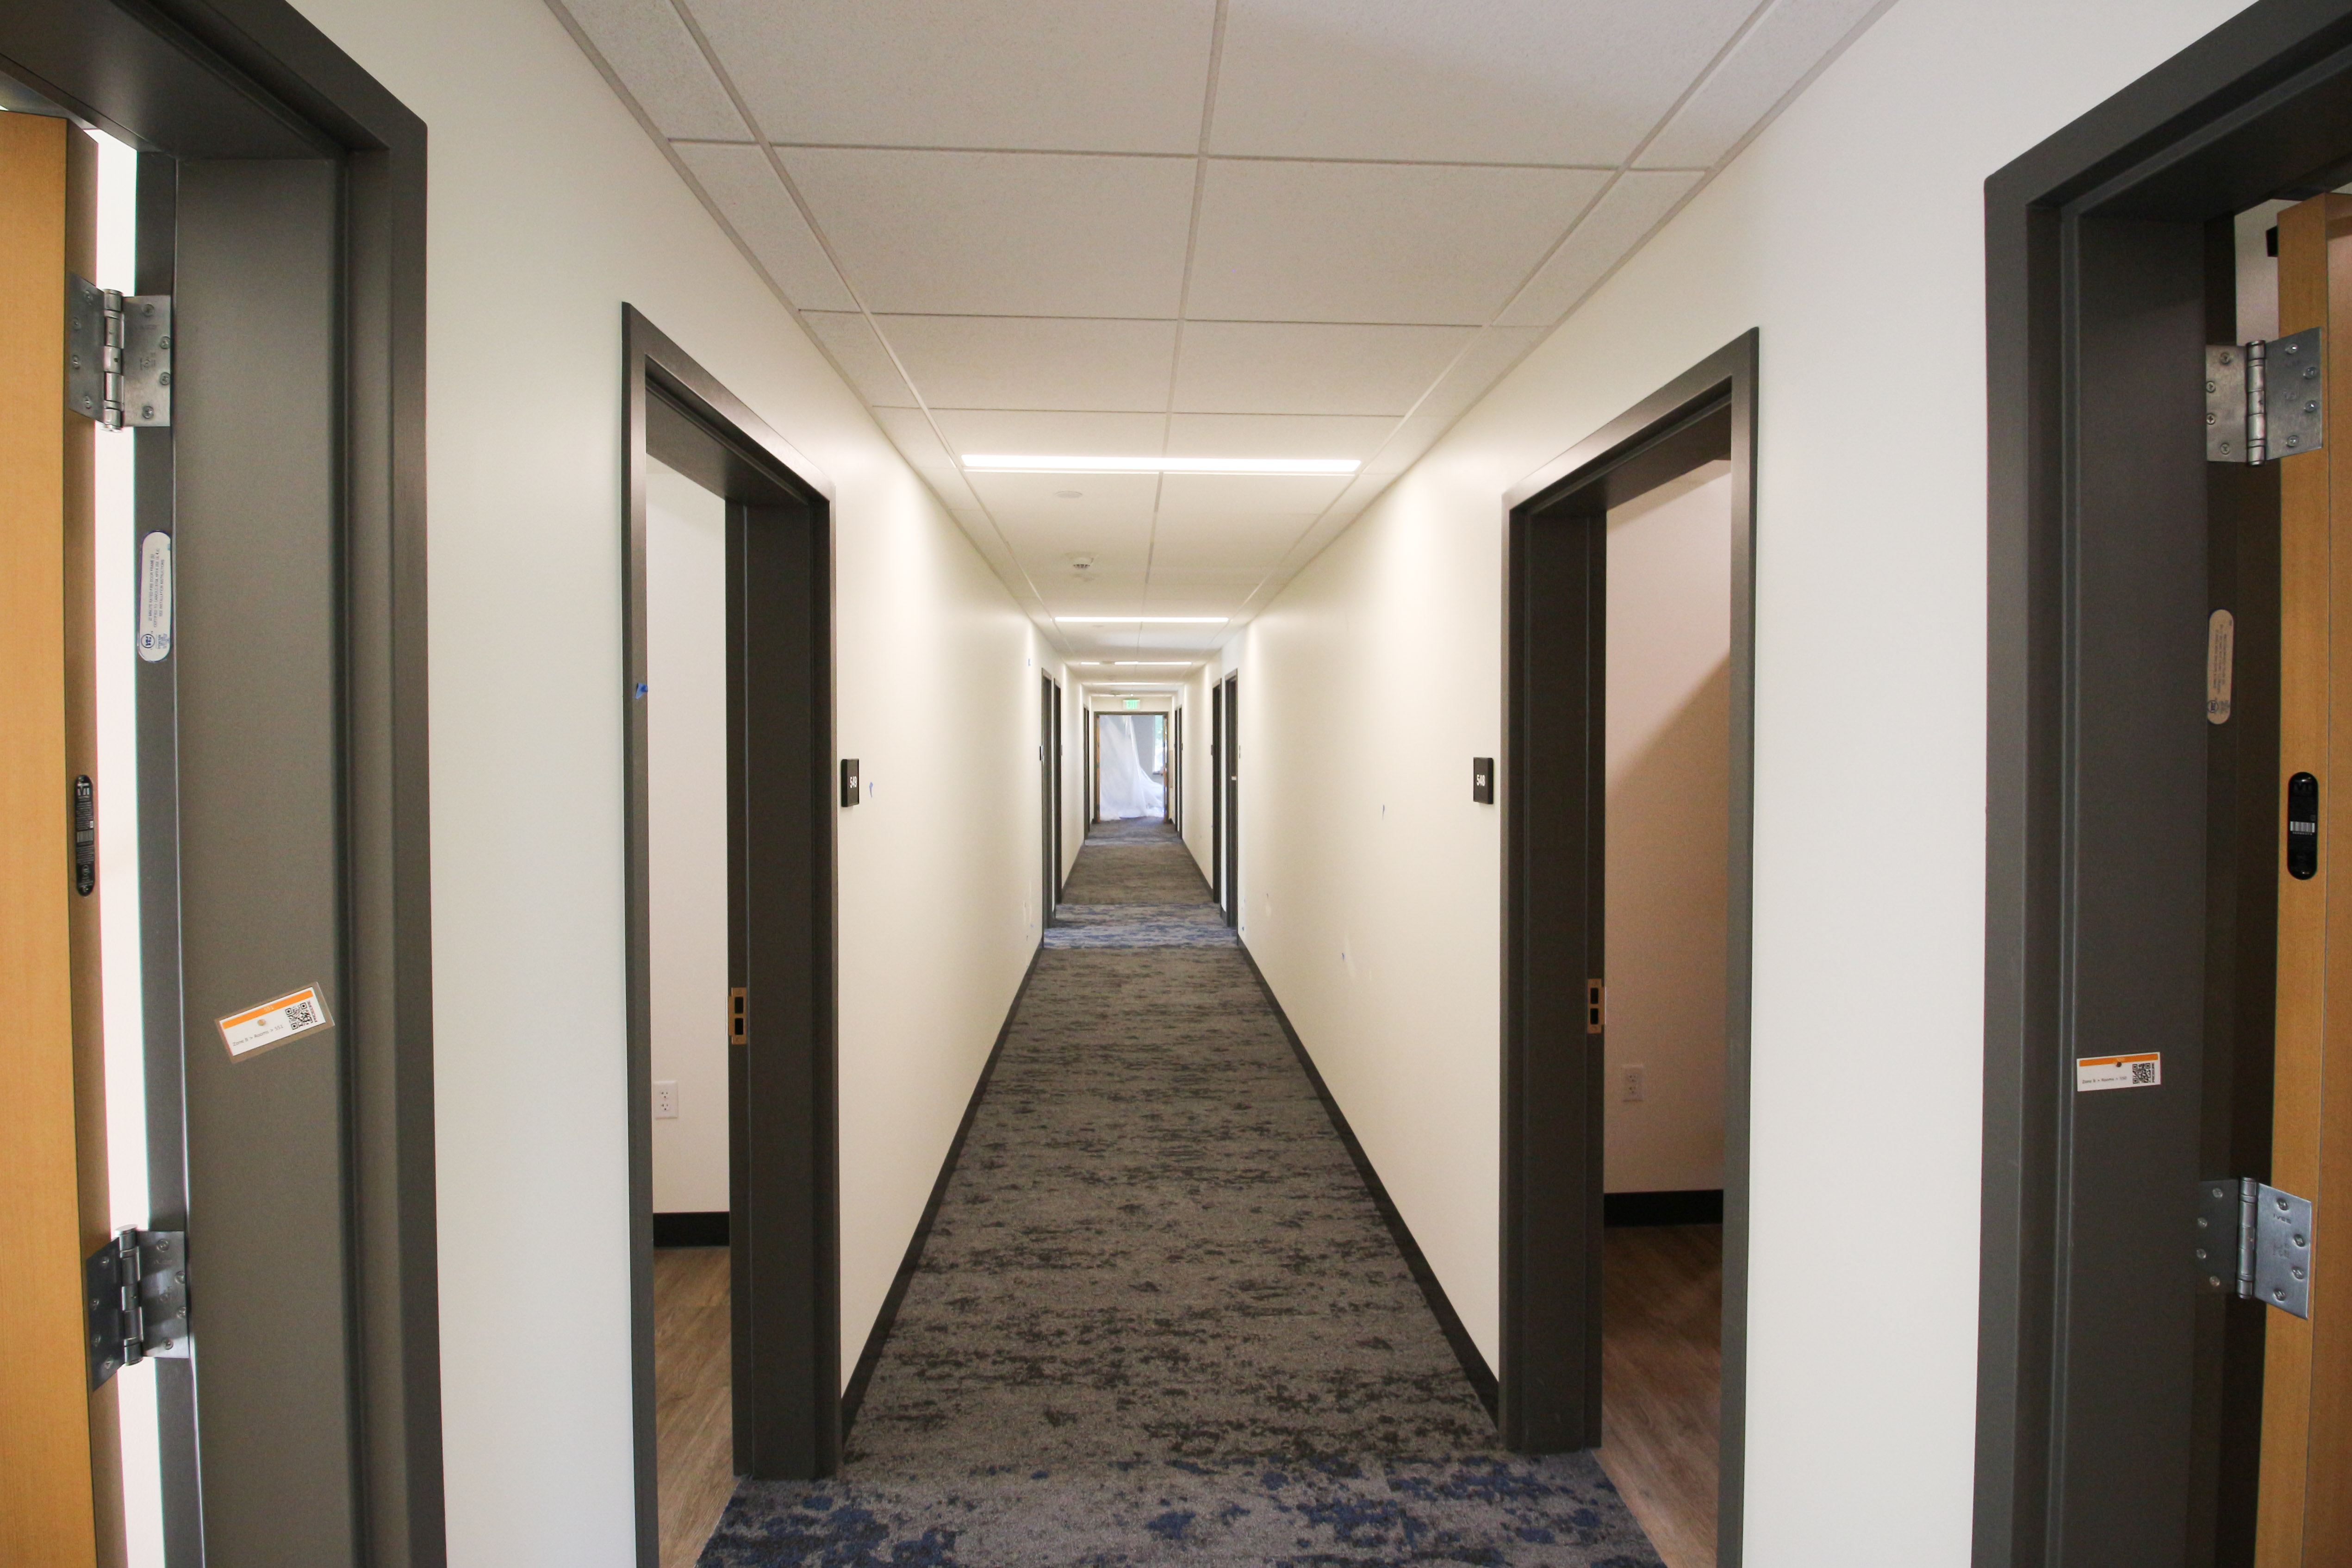 Hallway to student rooms